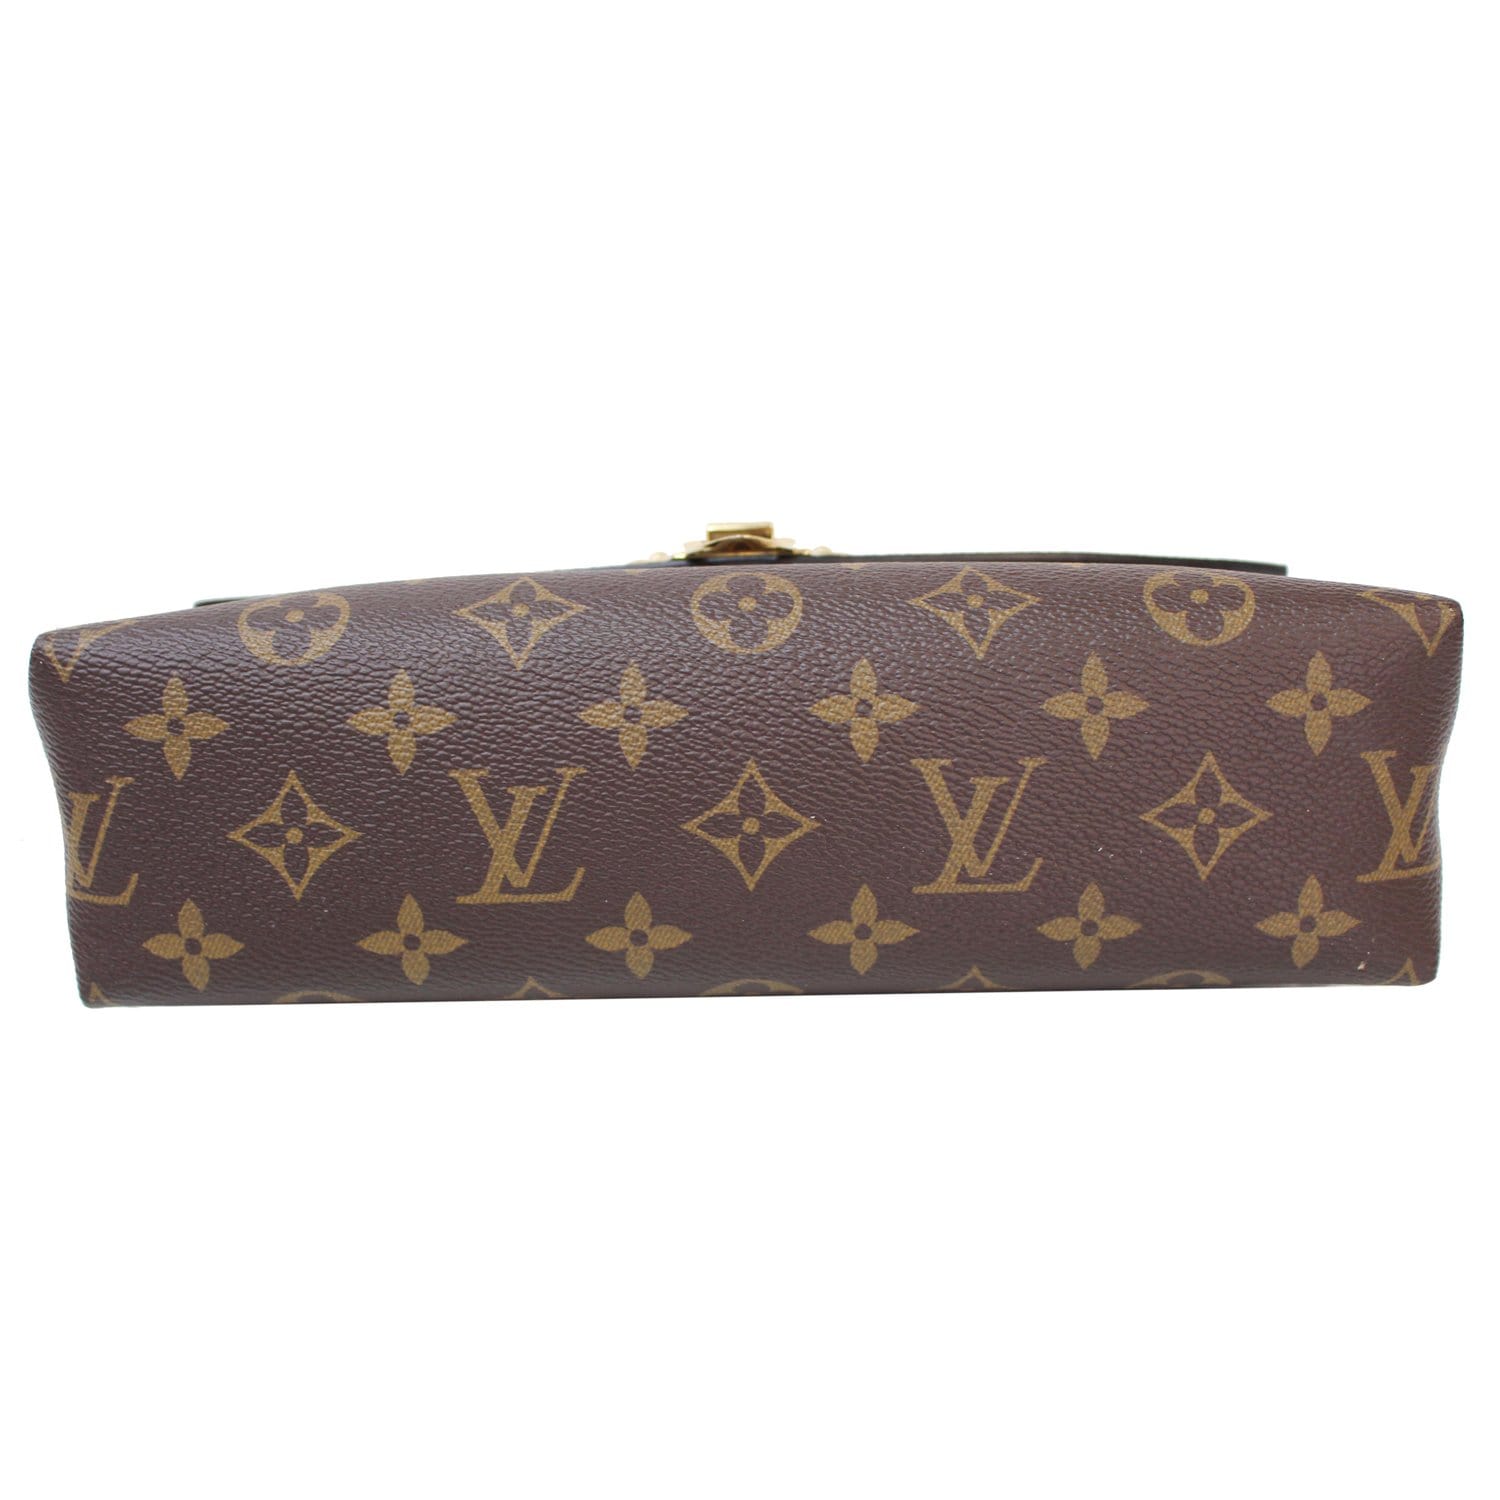 Louis Vuitton - Authenticated Saint Placide Handbag - Leather Beige for Women, Very Good Condition